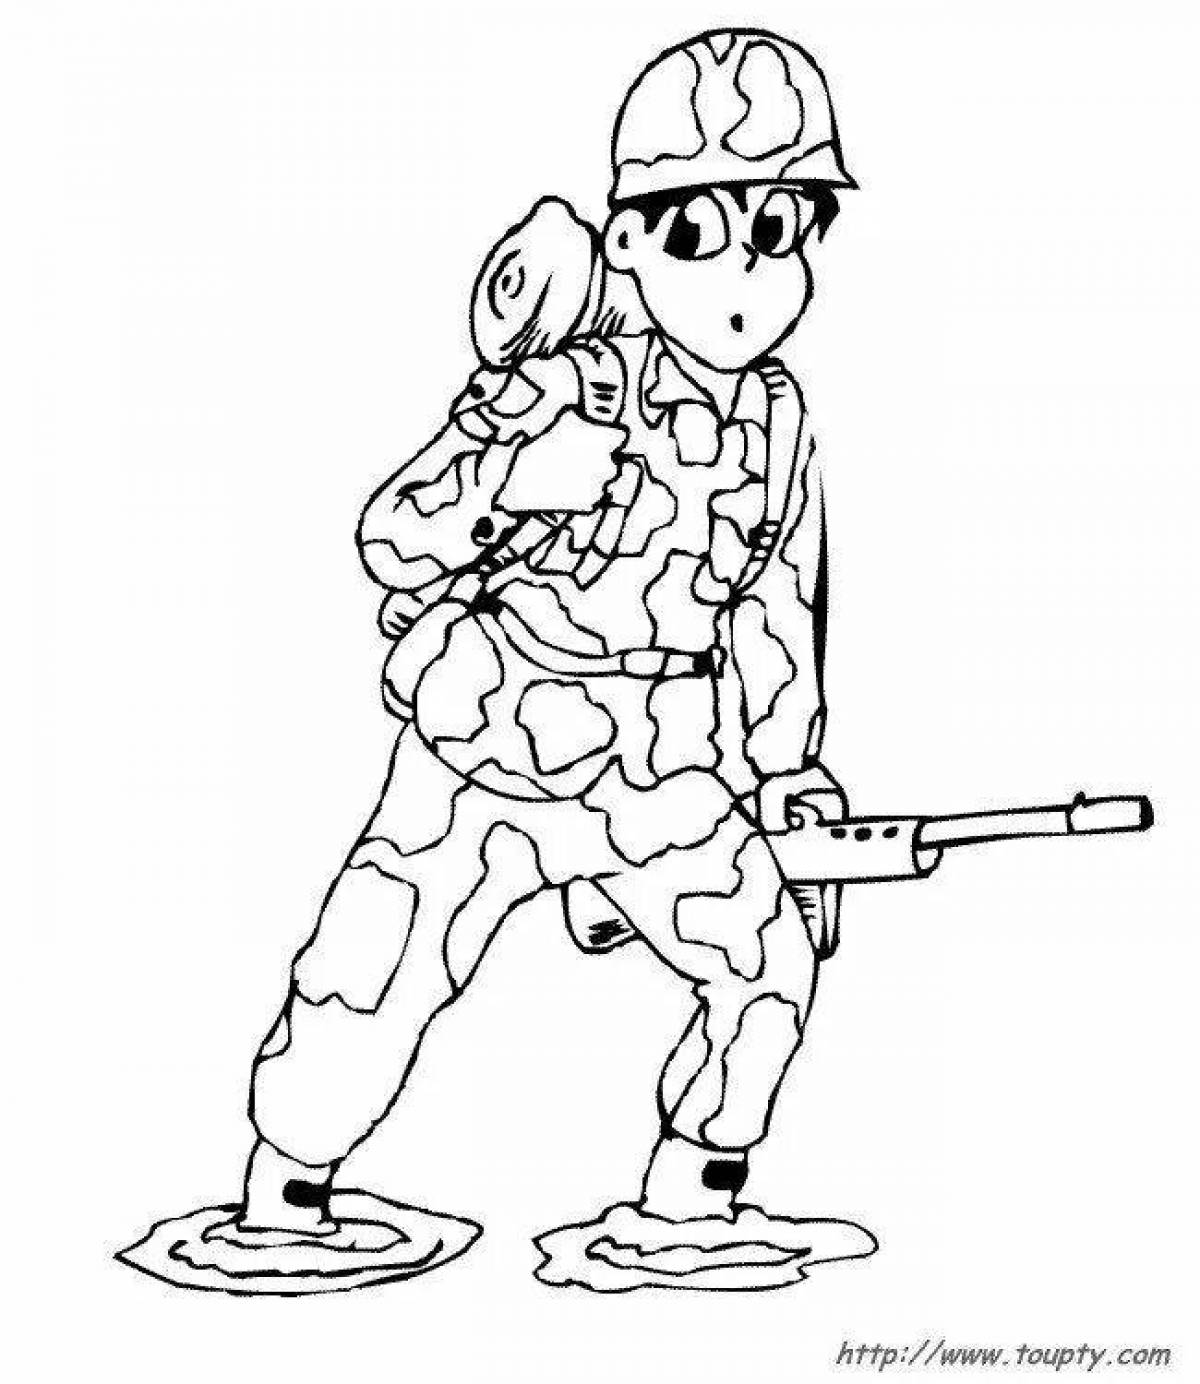 Impressive soldier figurine coloring page